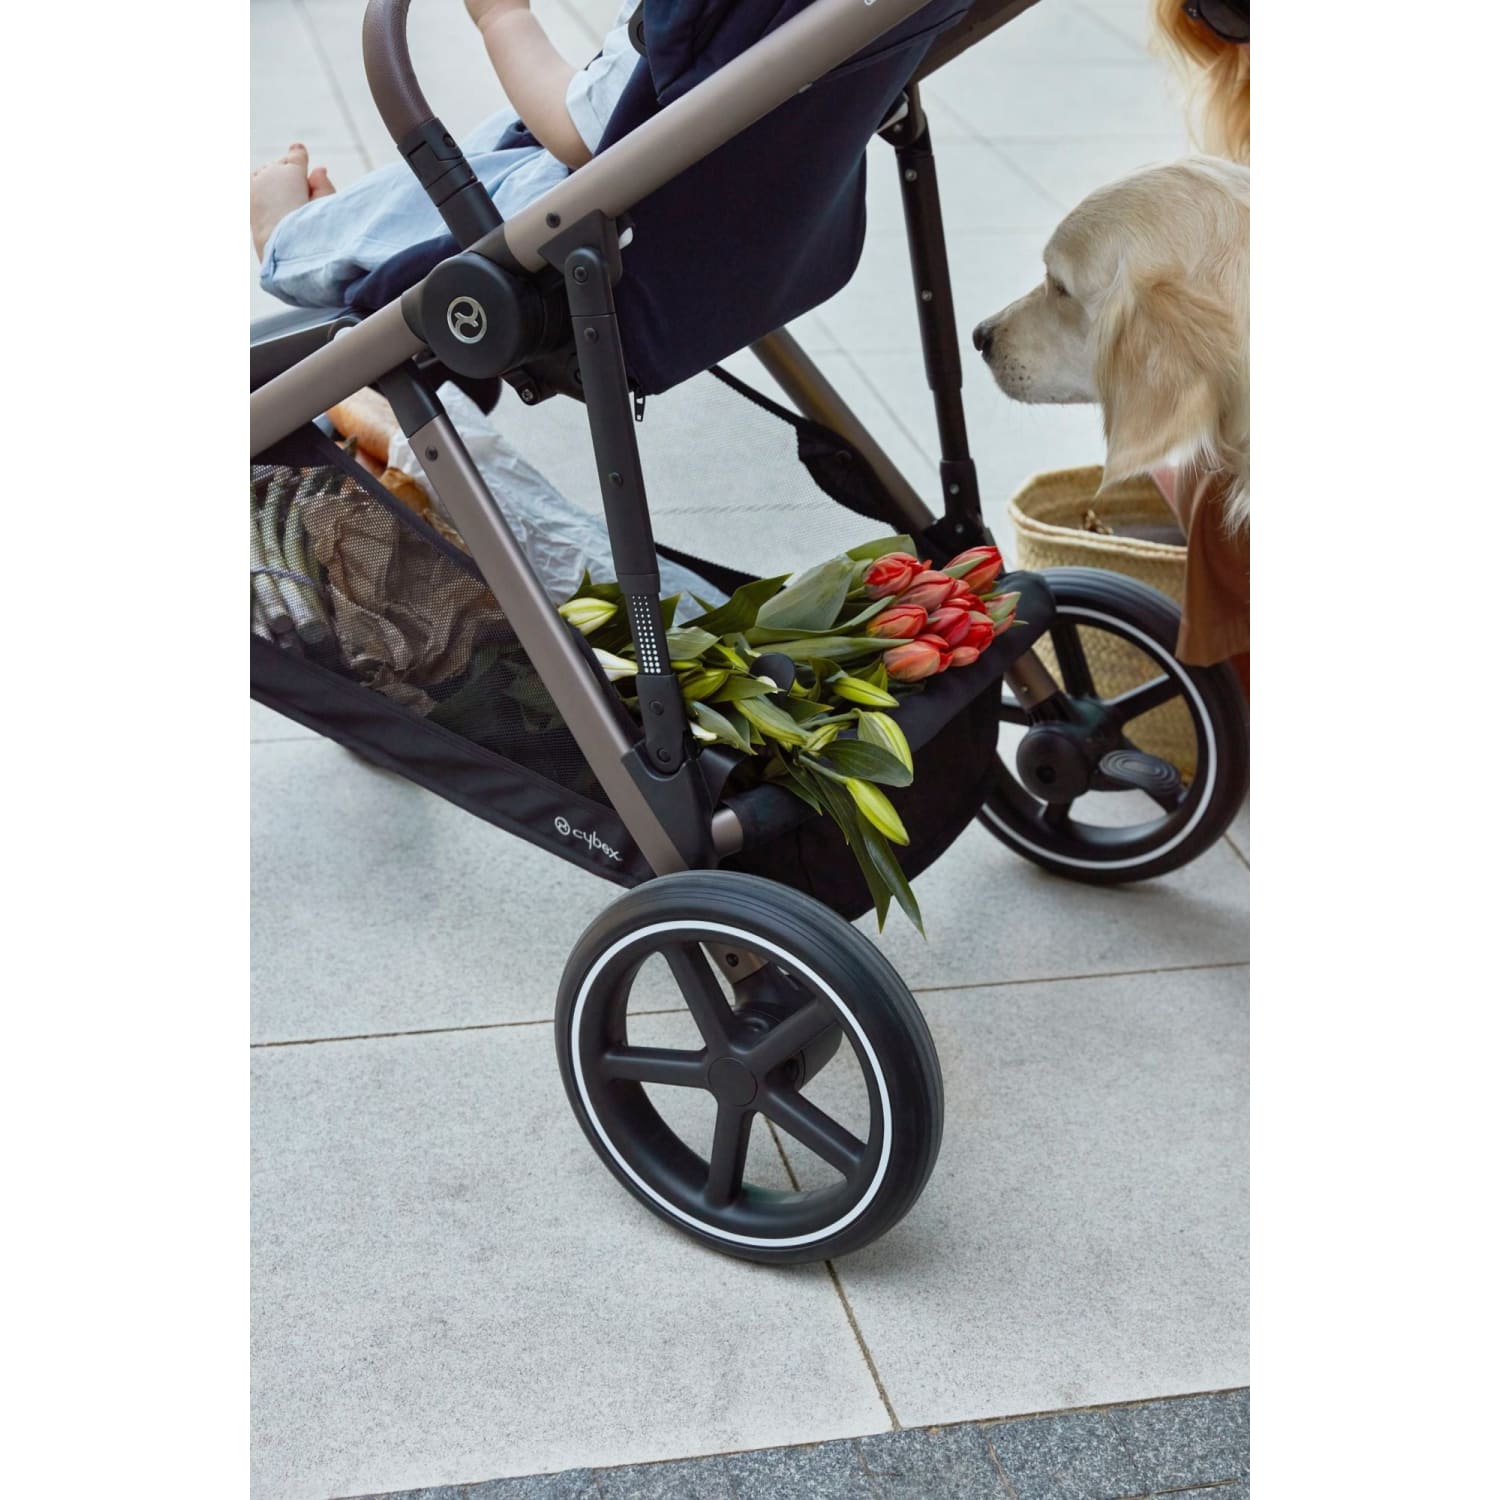 CYBEX Gazelle S Complete Baby Infant City Shopper Stroller -